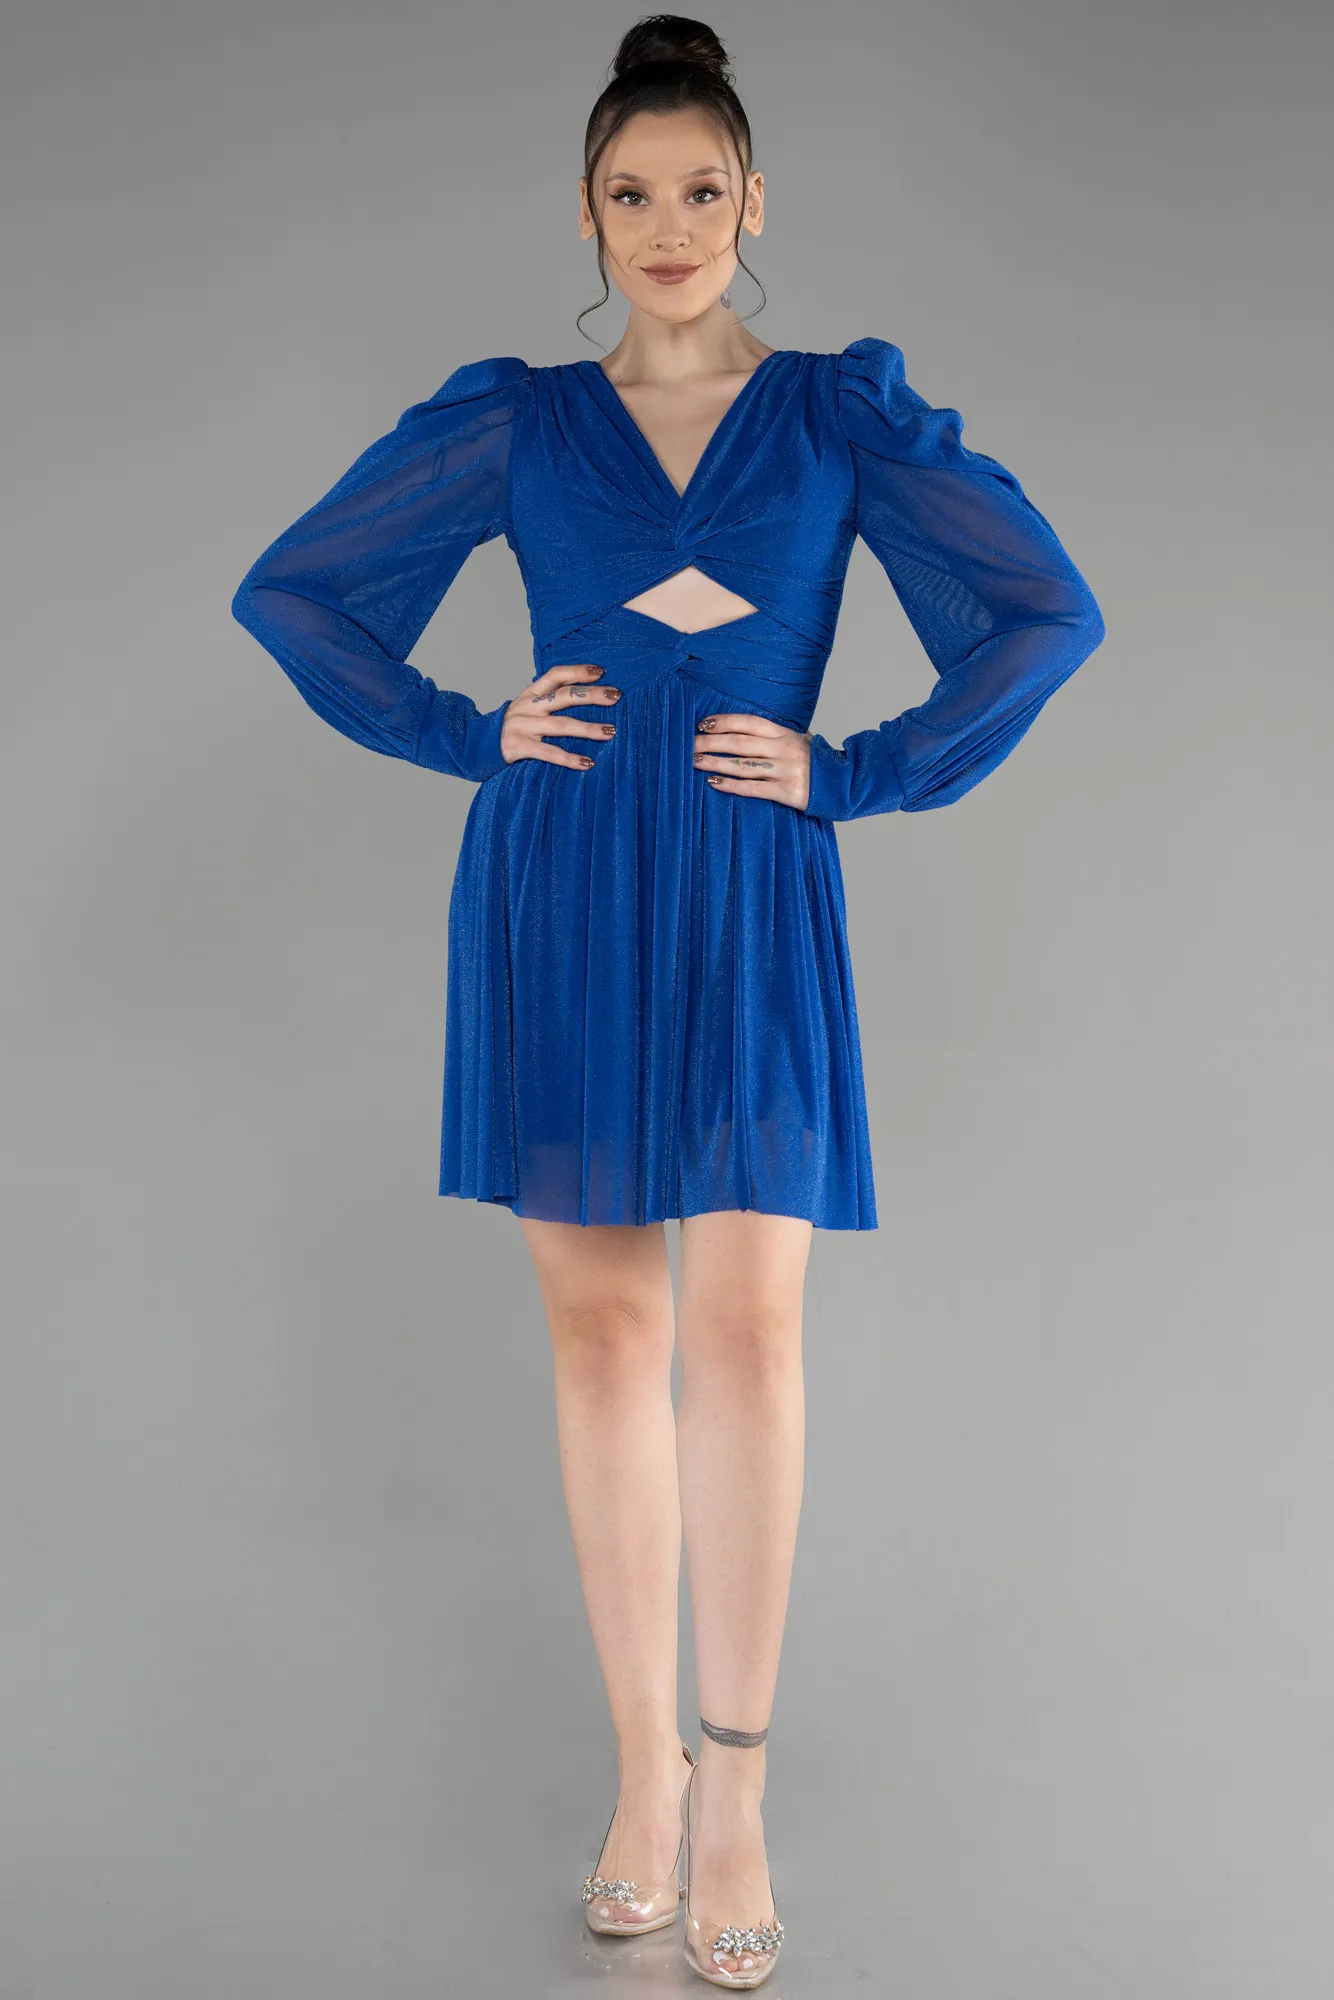 Sax Blue-Short Invitation Dress ABK1839